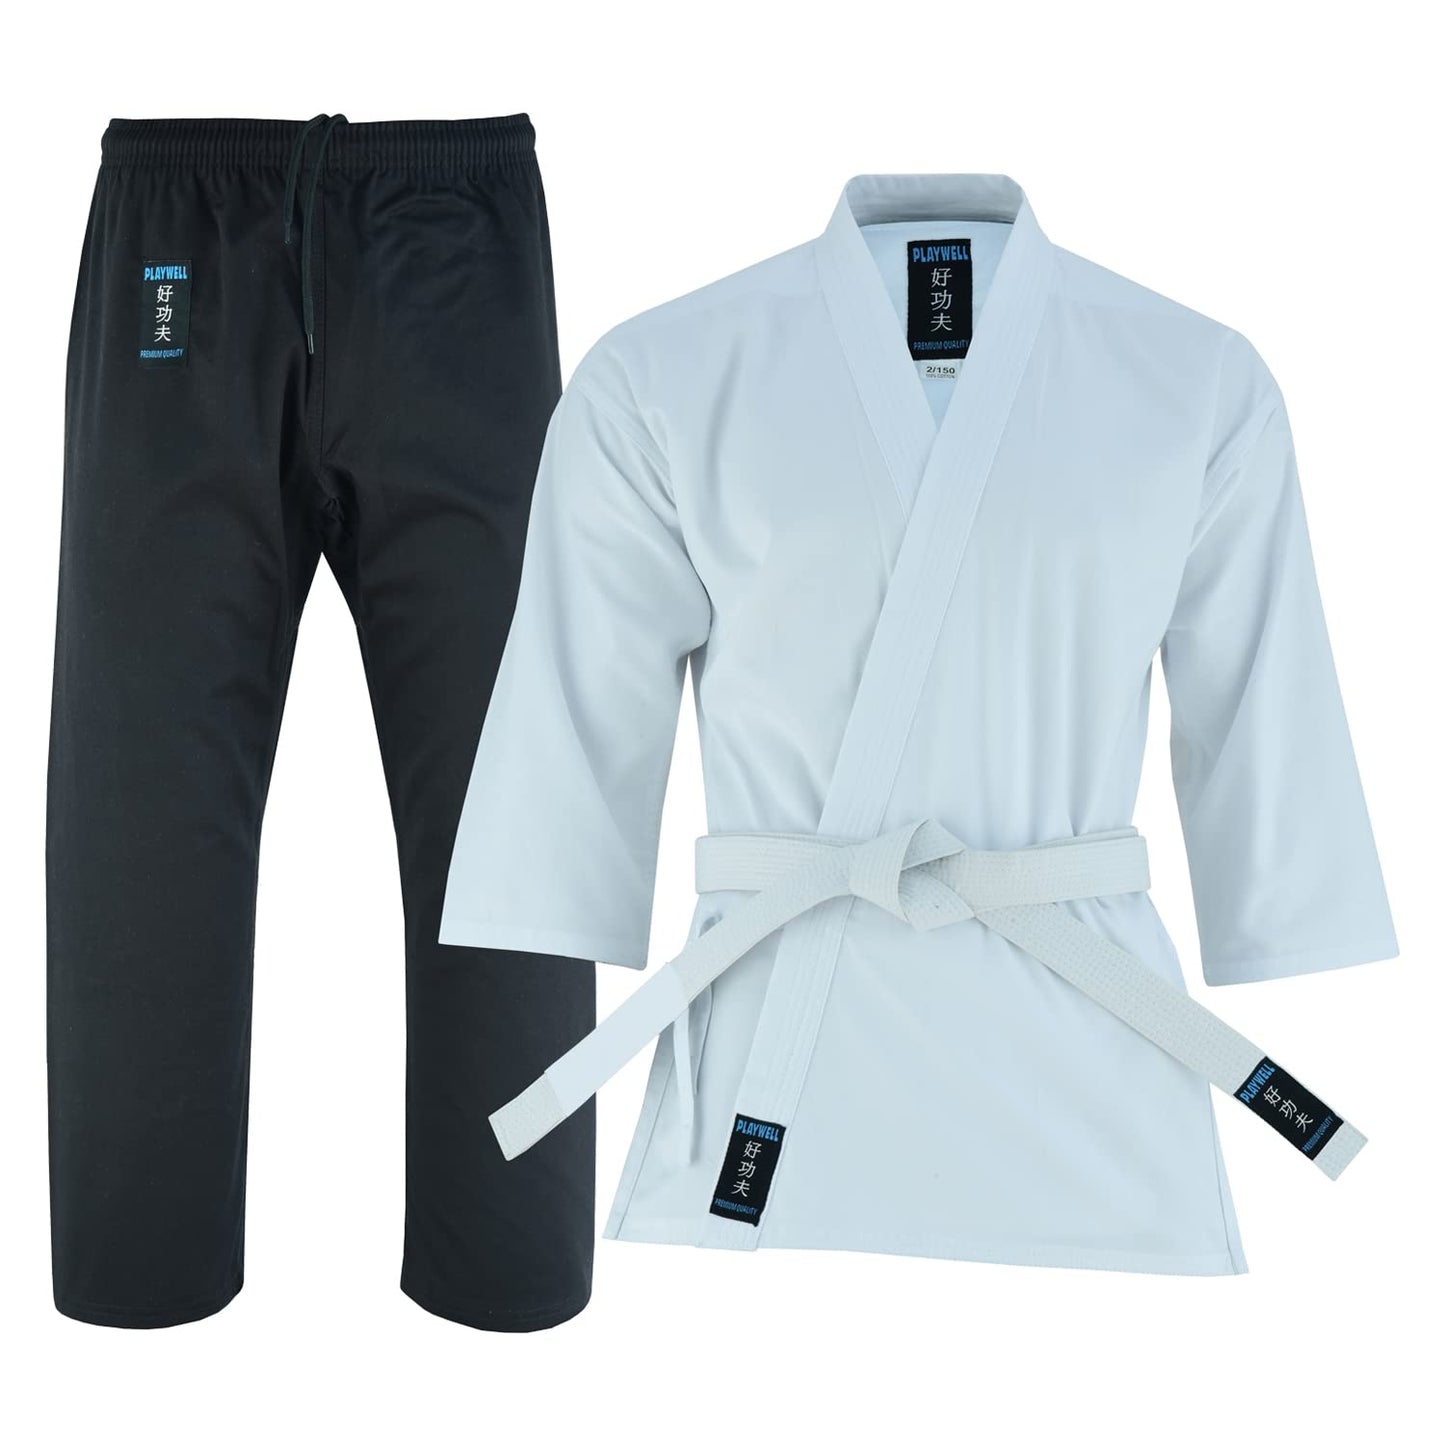 Playwell Medium Weight Karate Mixed White Jacket/Black Trouser Uniform Suit Gi - 9oz